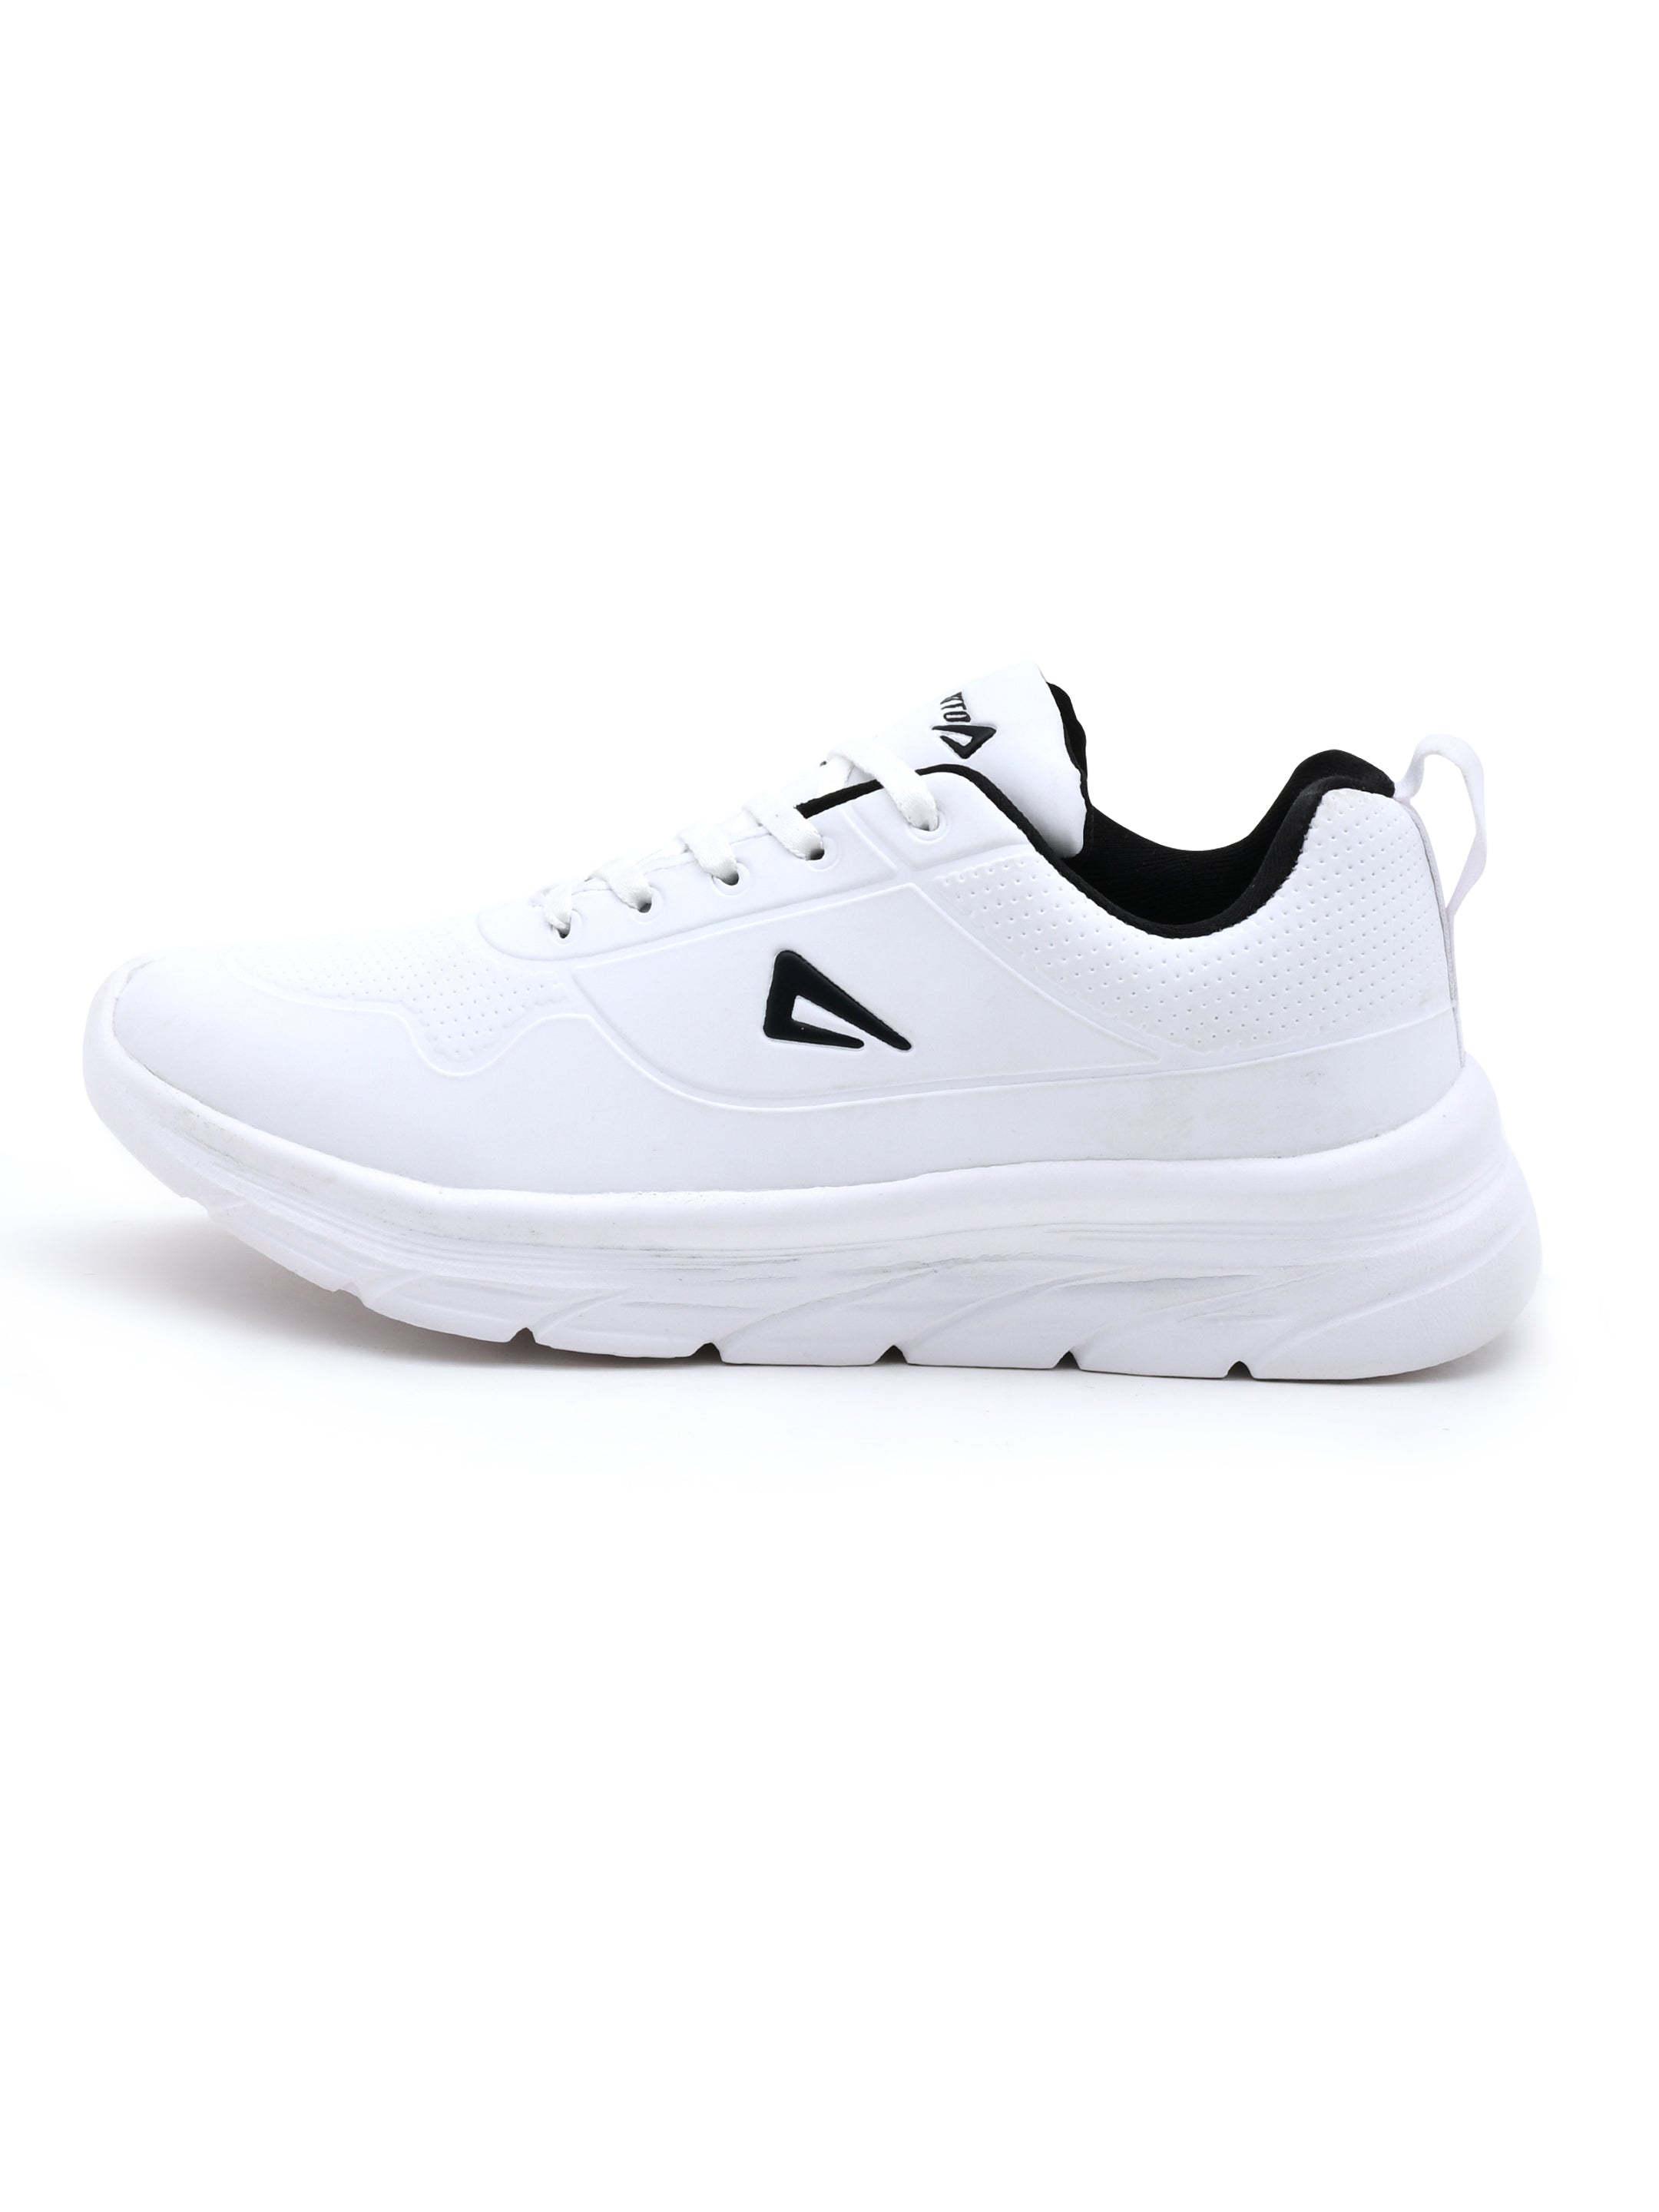 Impakto  Disruptor Sport Shoes Men's  White Walking Shoes